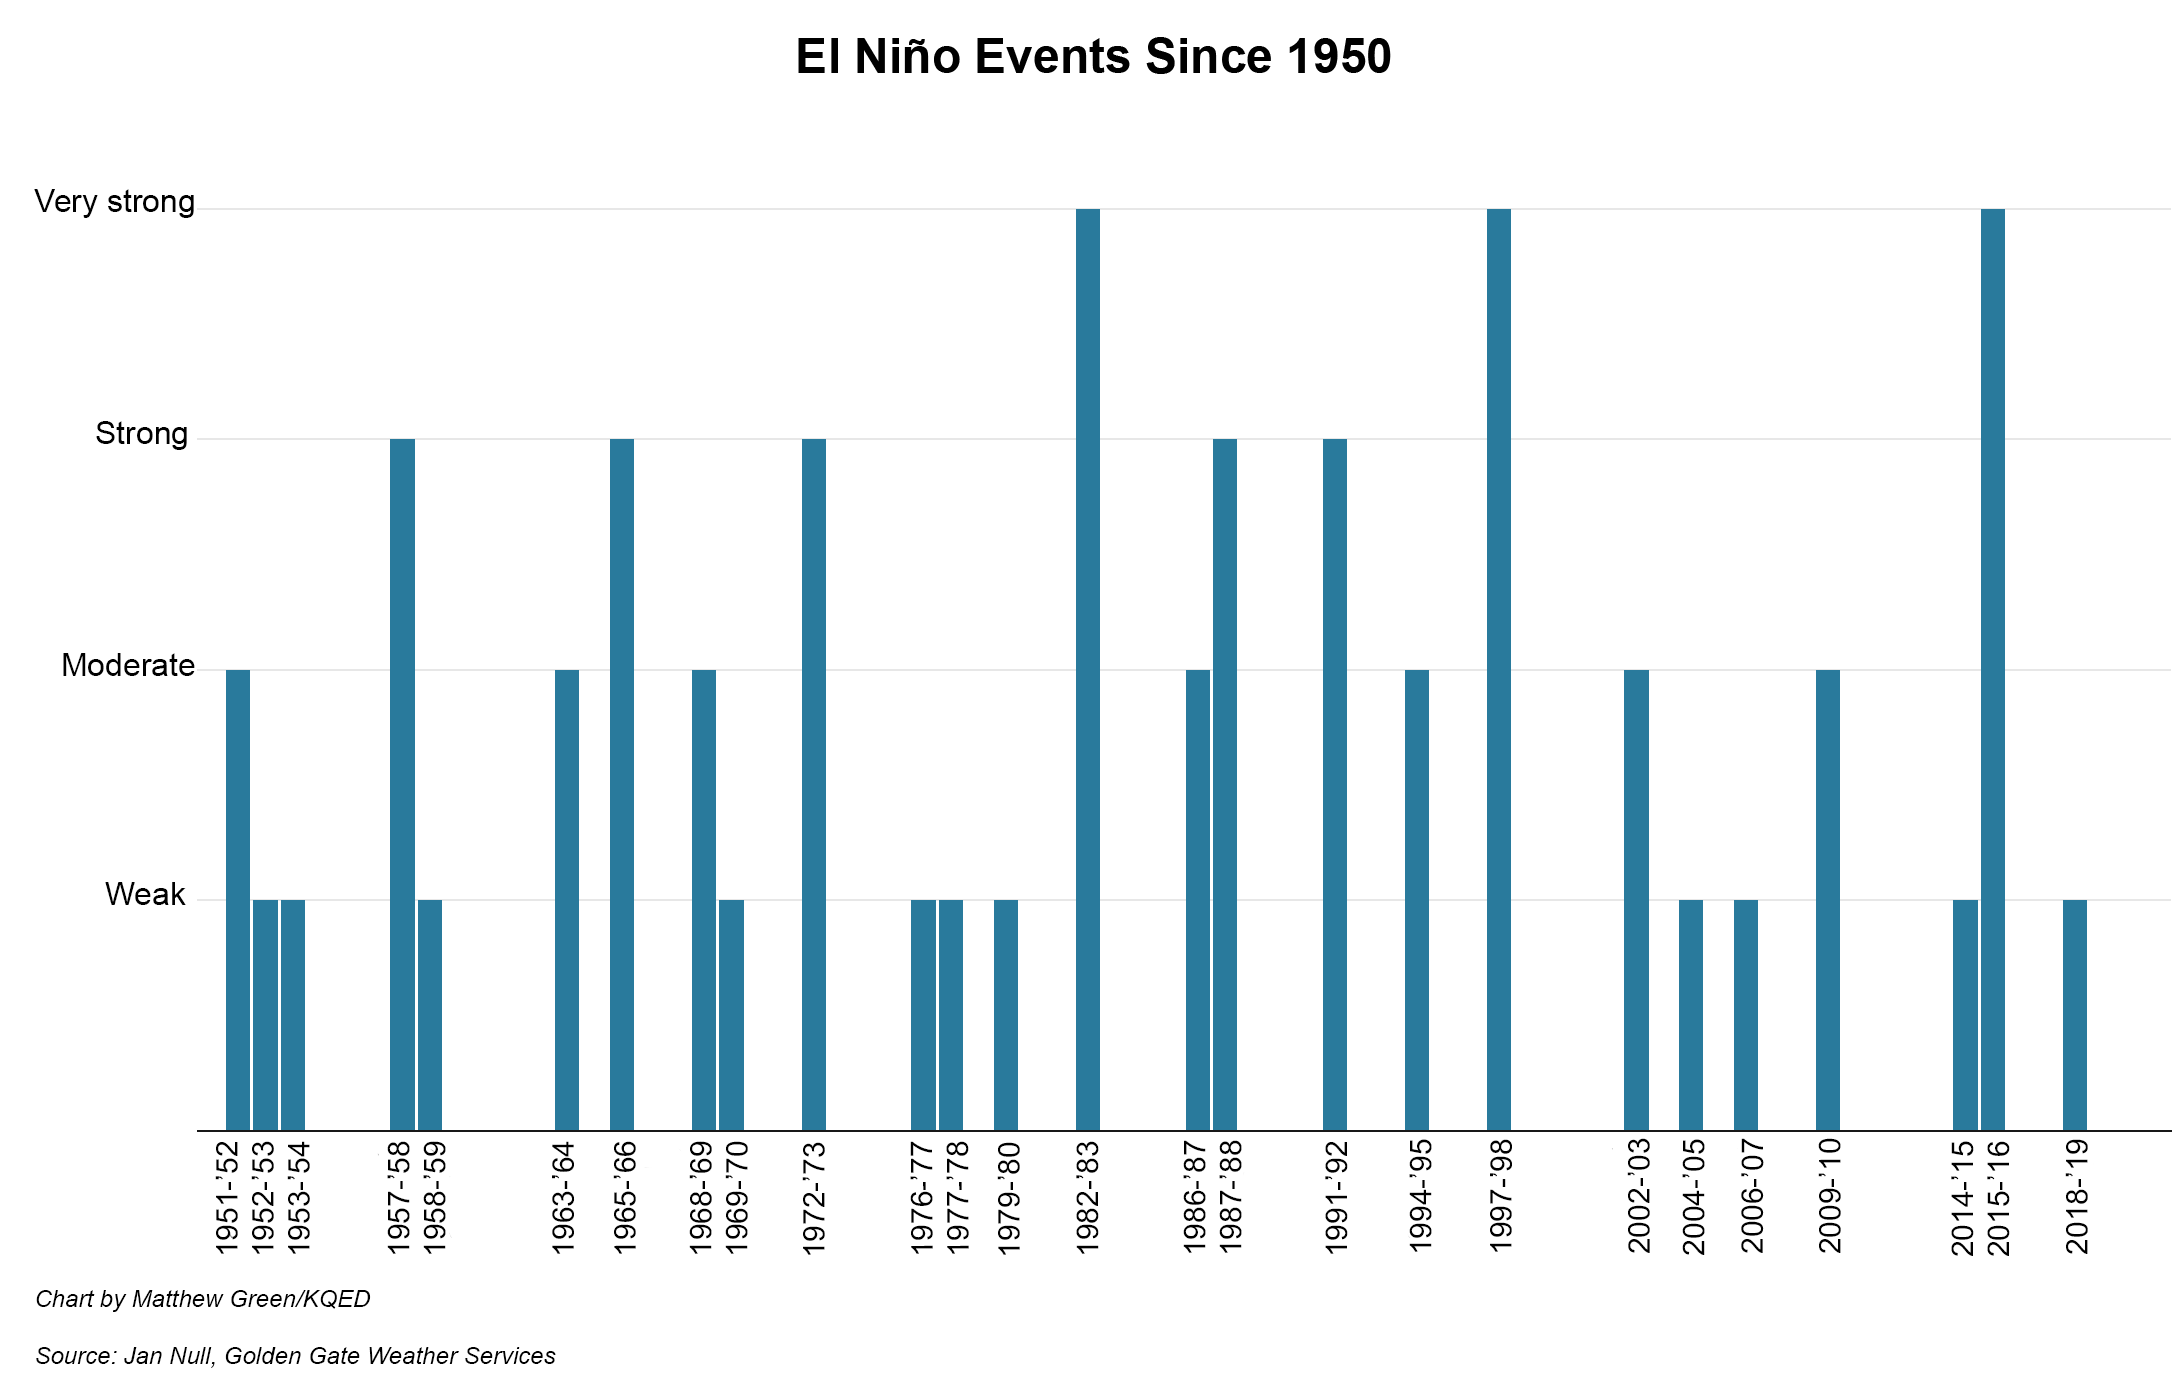 A vertical bar graph showing El Niño events since 1950.